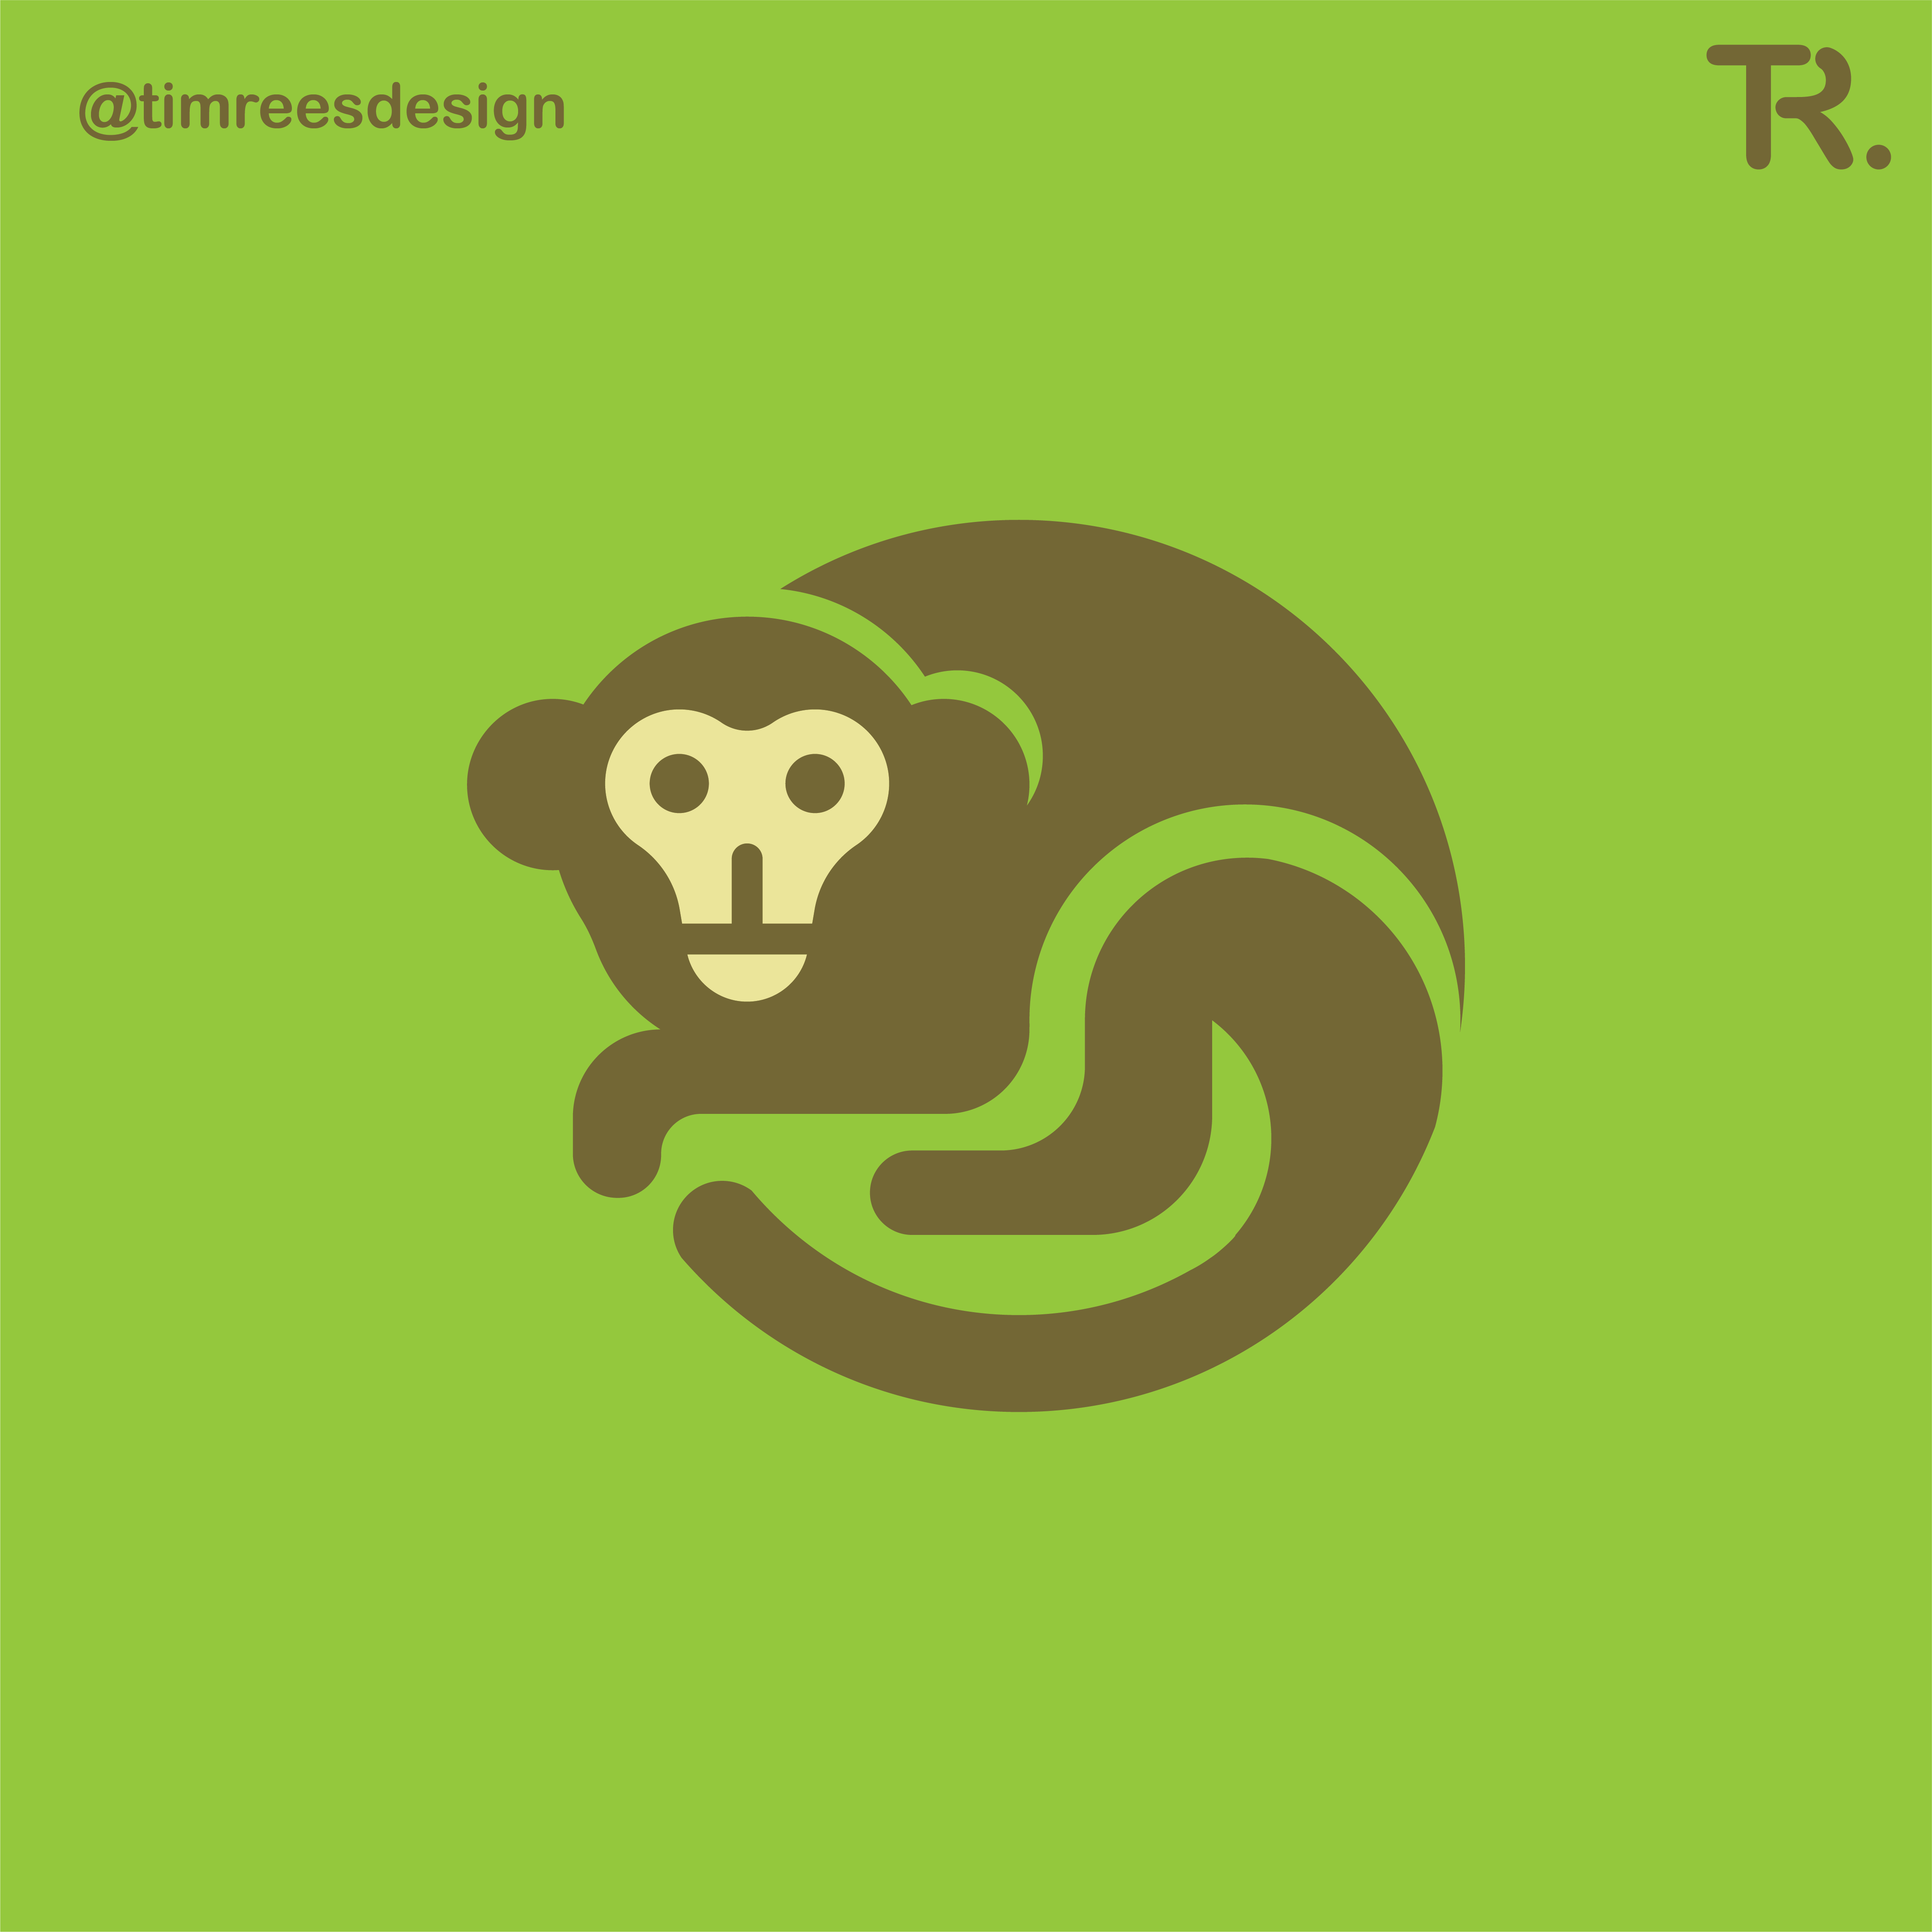 green monkeys logo